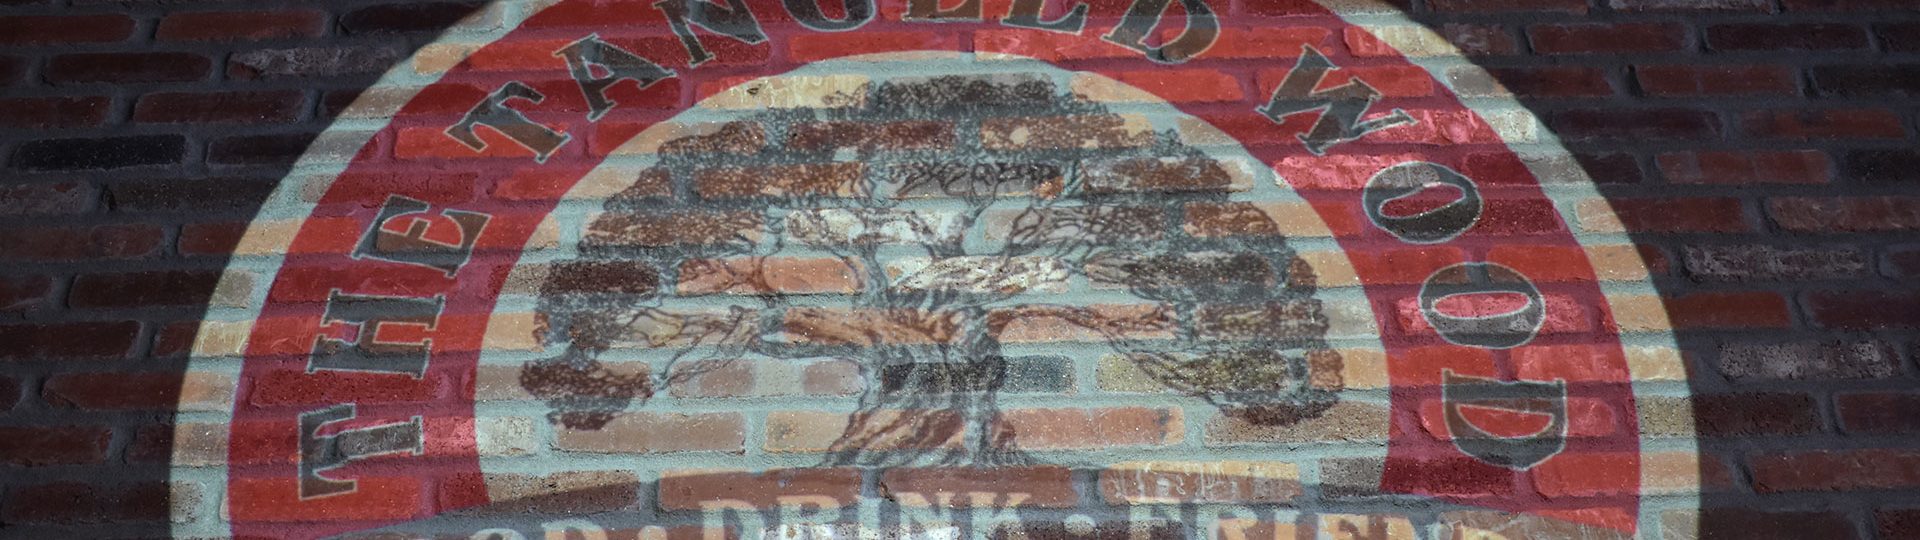 The Tangled Wood logo printed on a brick wall.